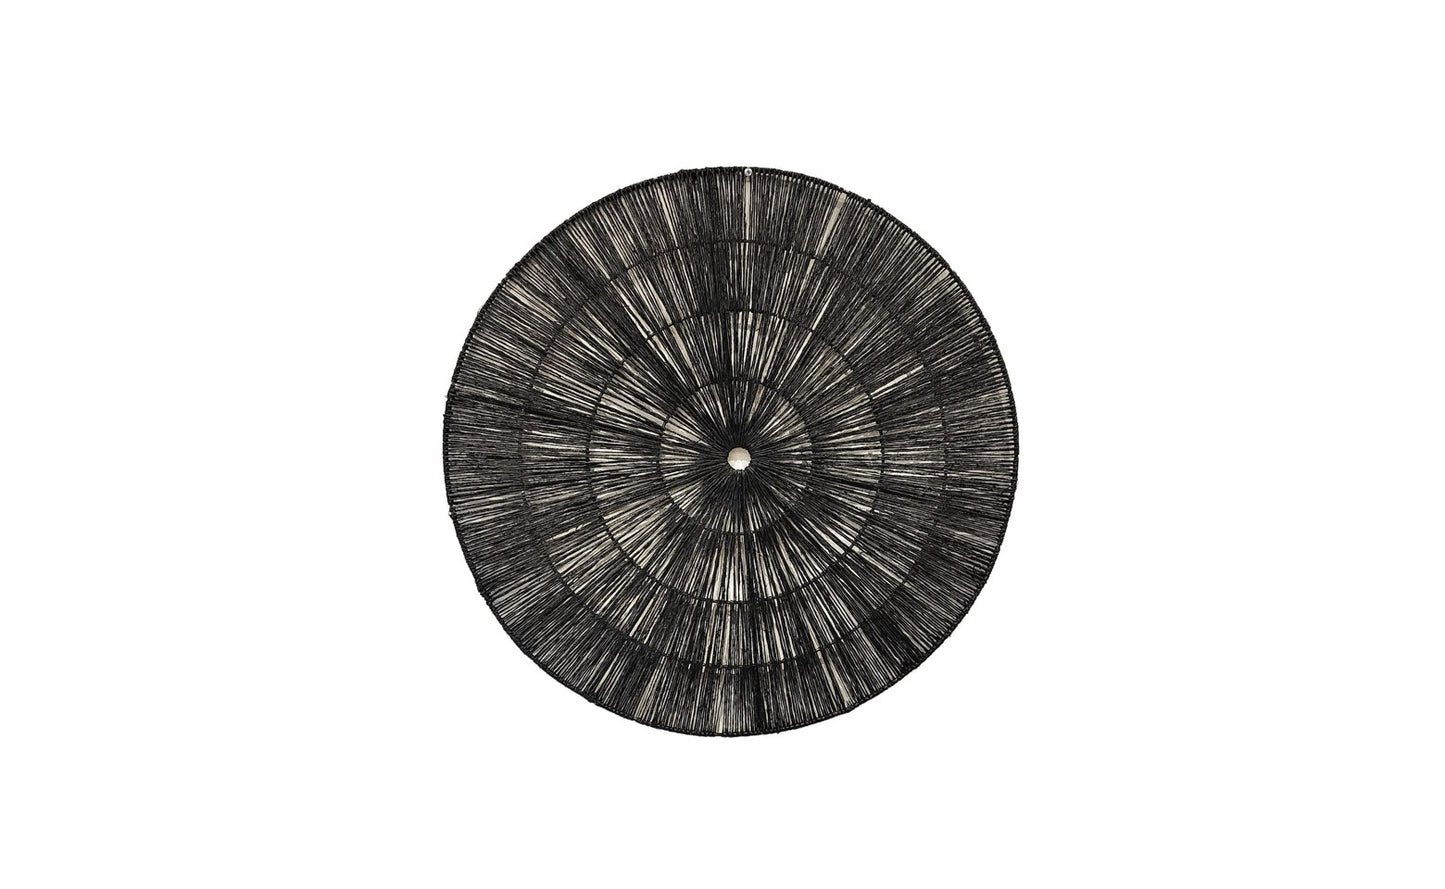 Dark Woven Wall Basket - Large - $135.00